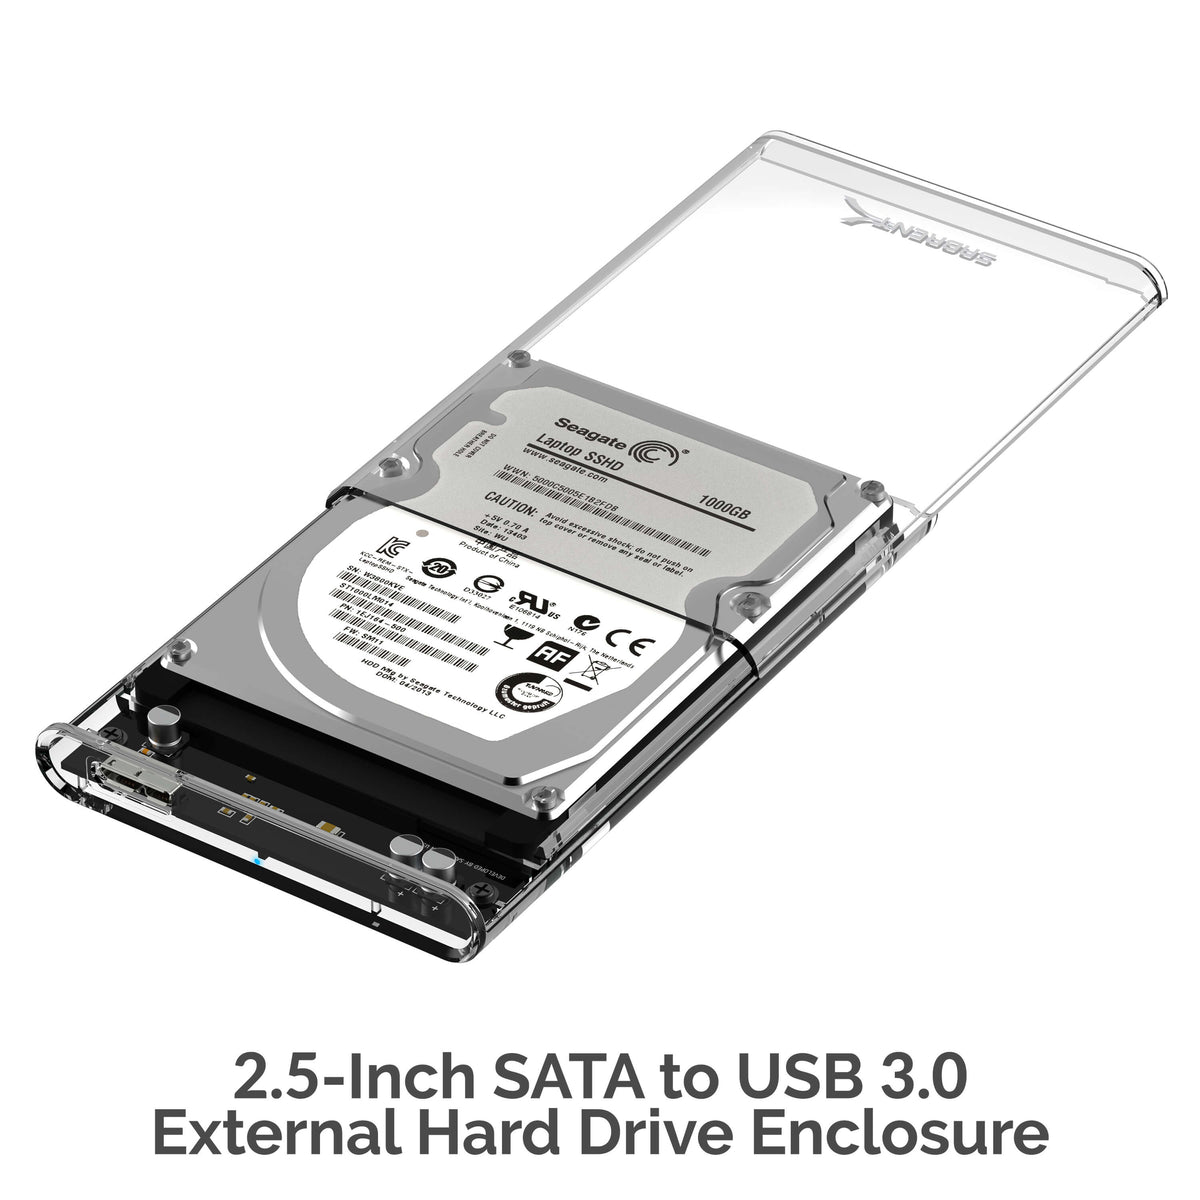 2.5-Inch SATA to USB 3.0 Enclosure